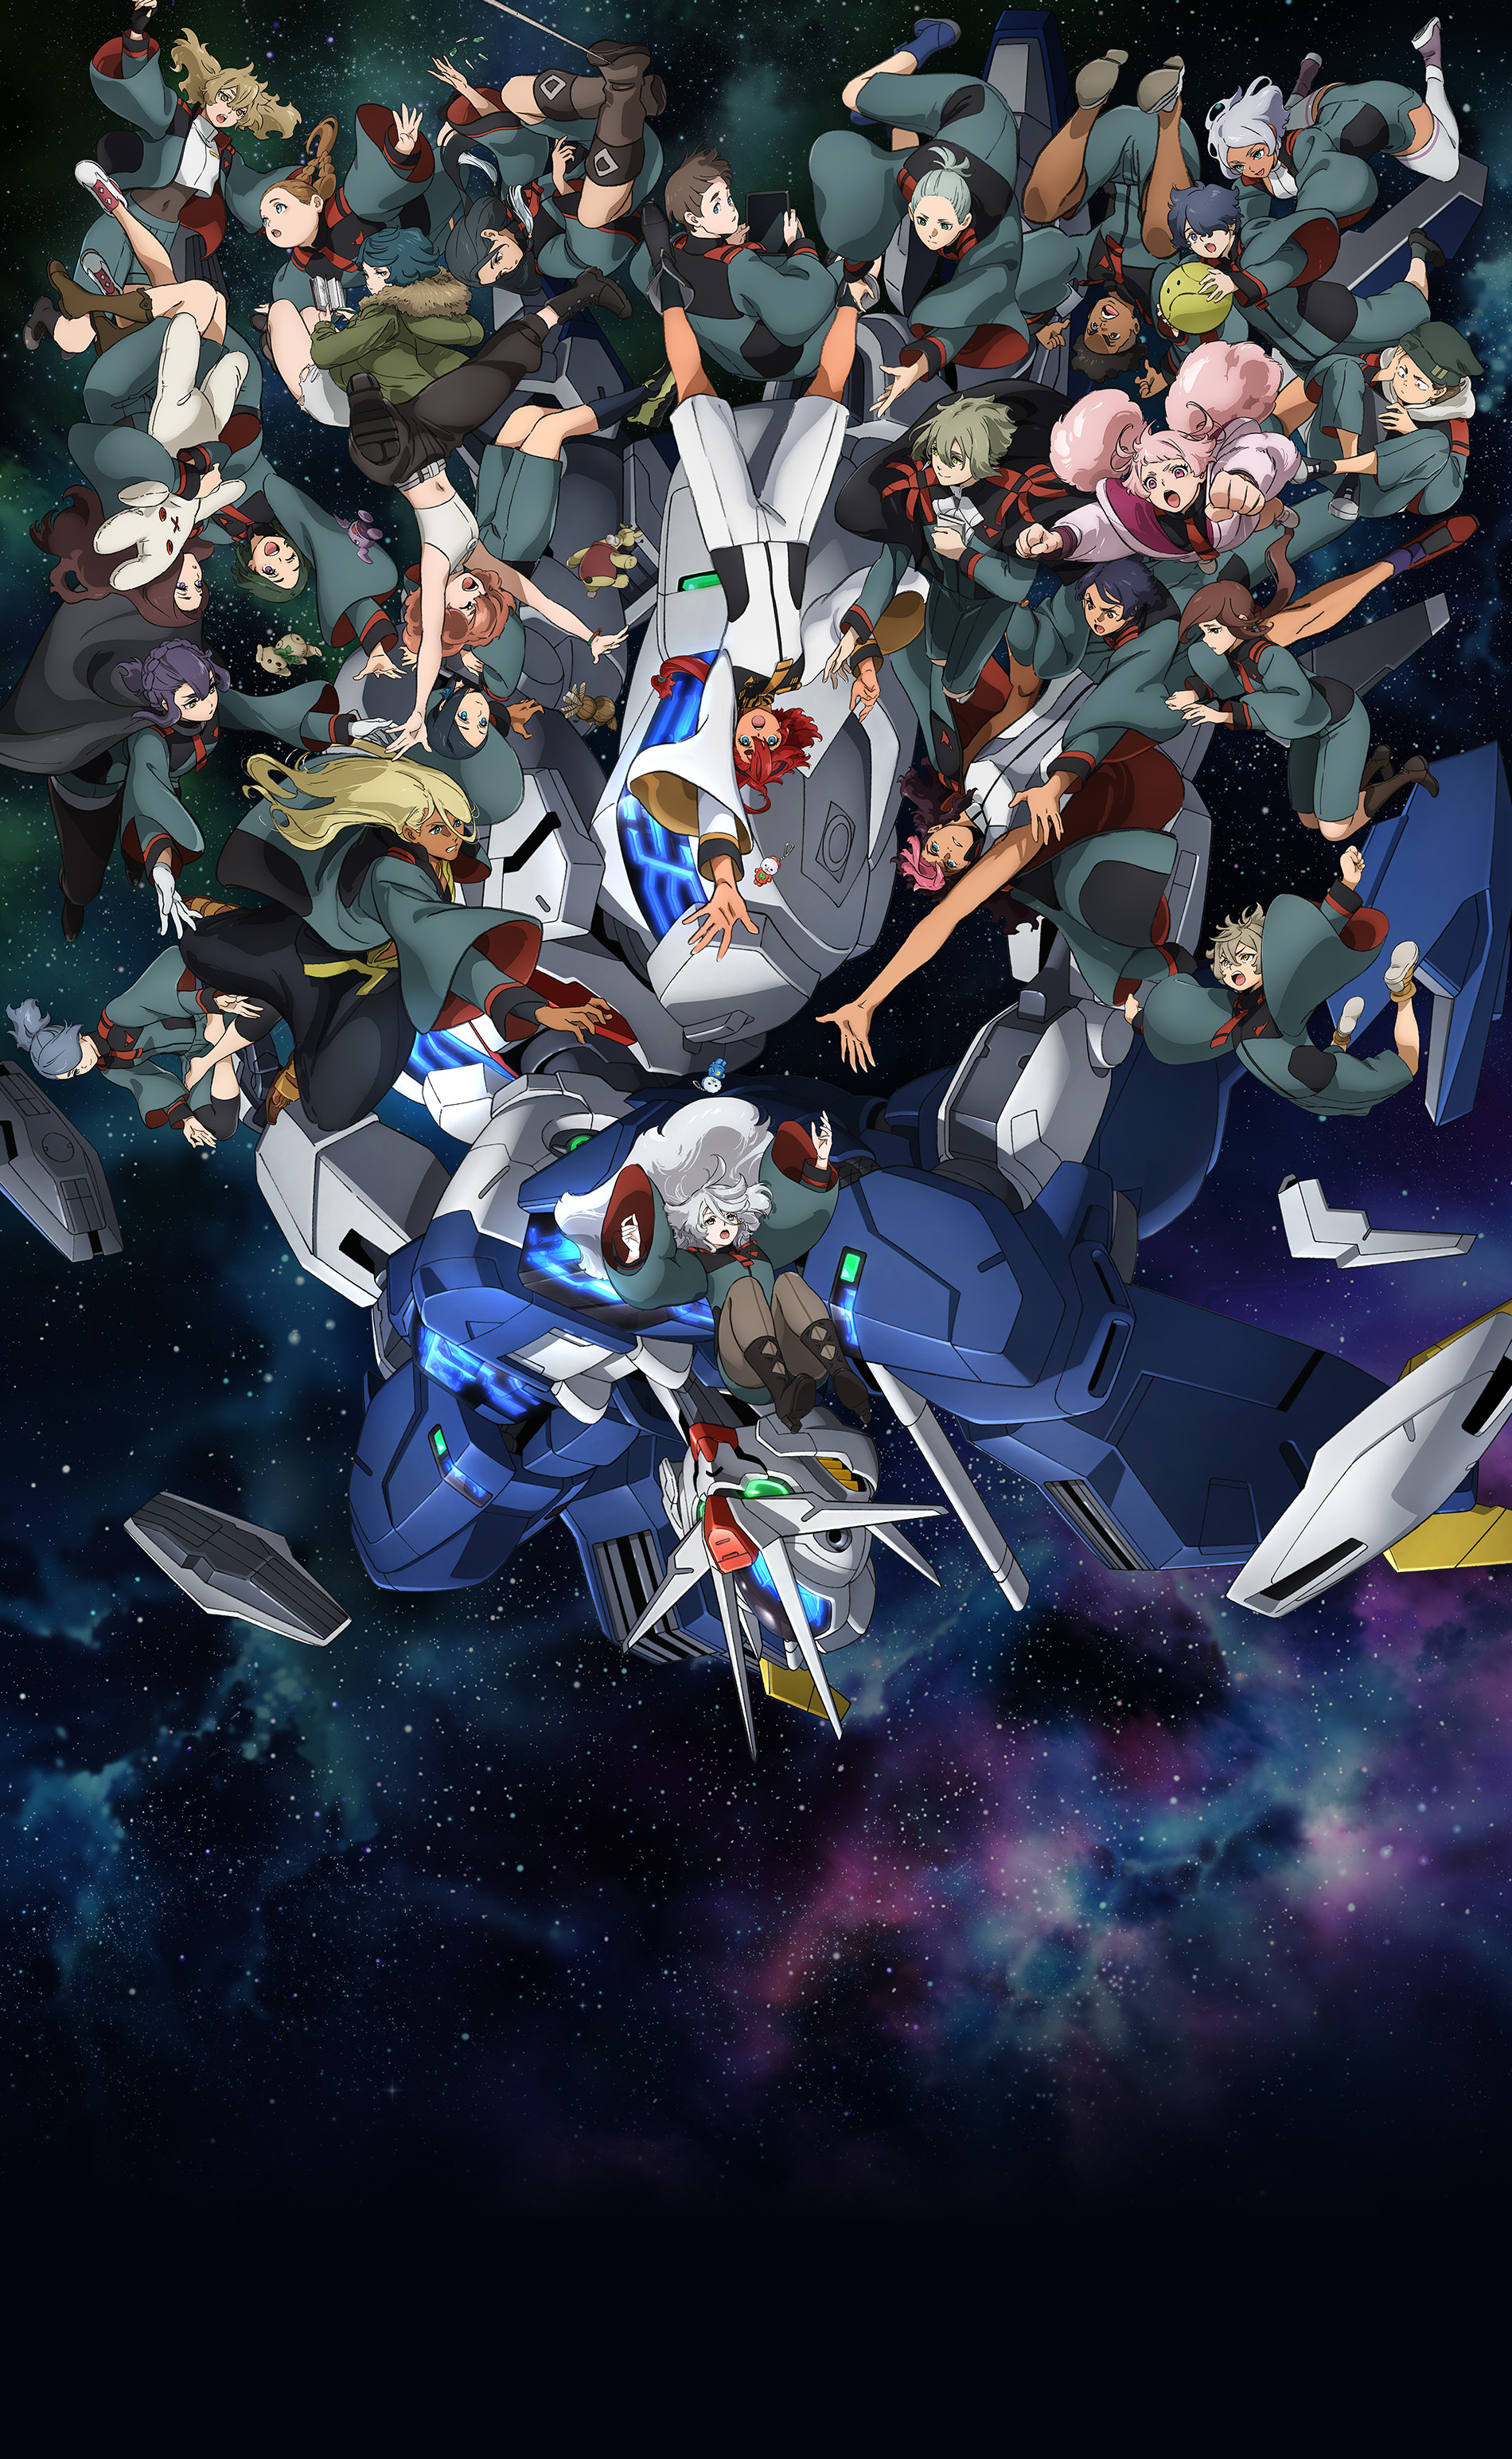 Turn A Gundam - Wikipedia